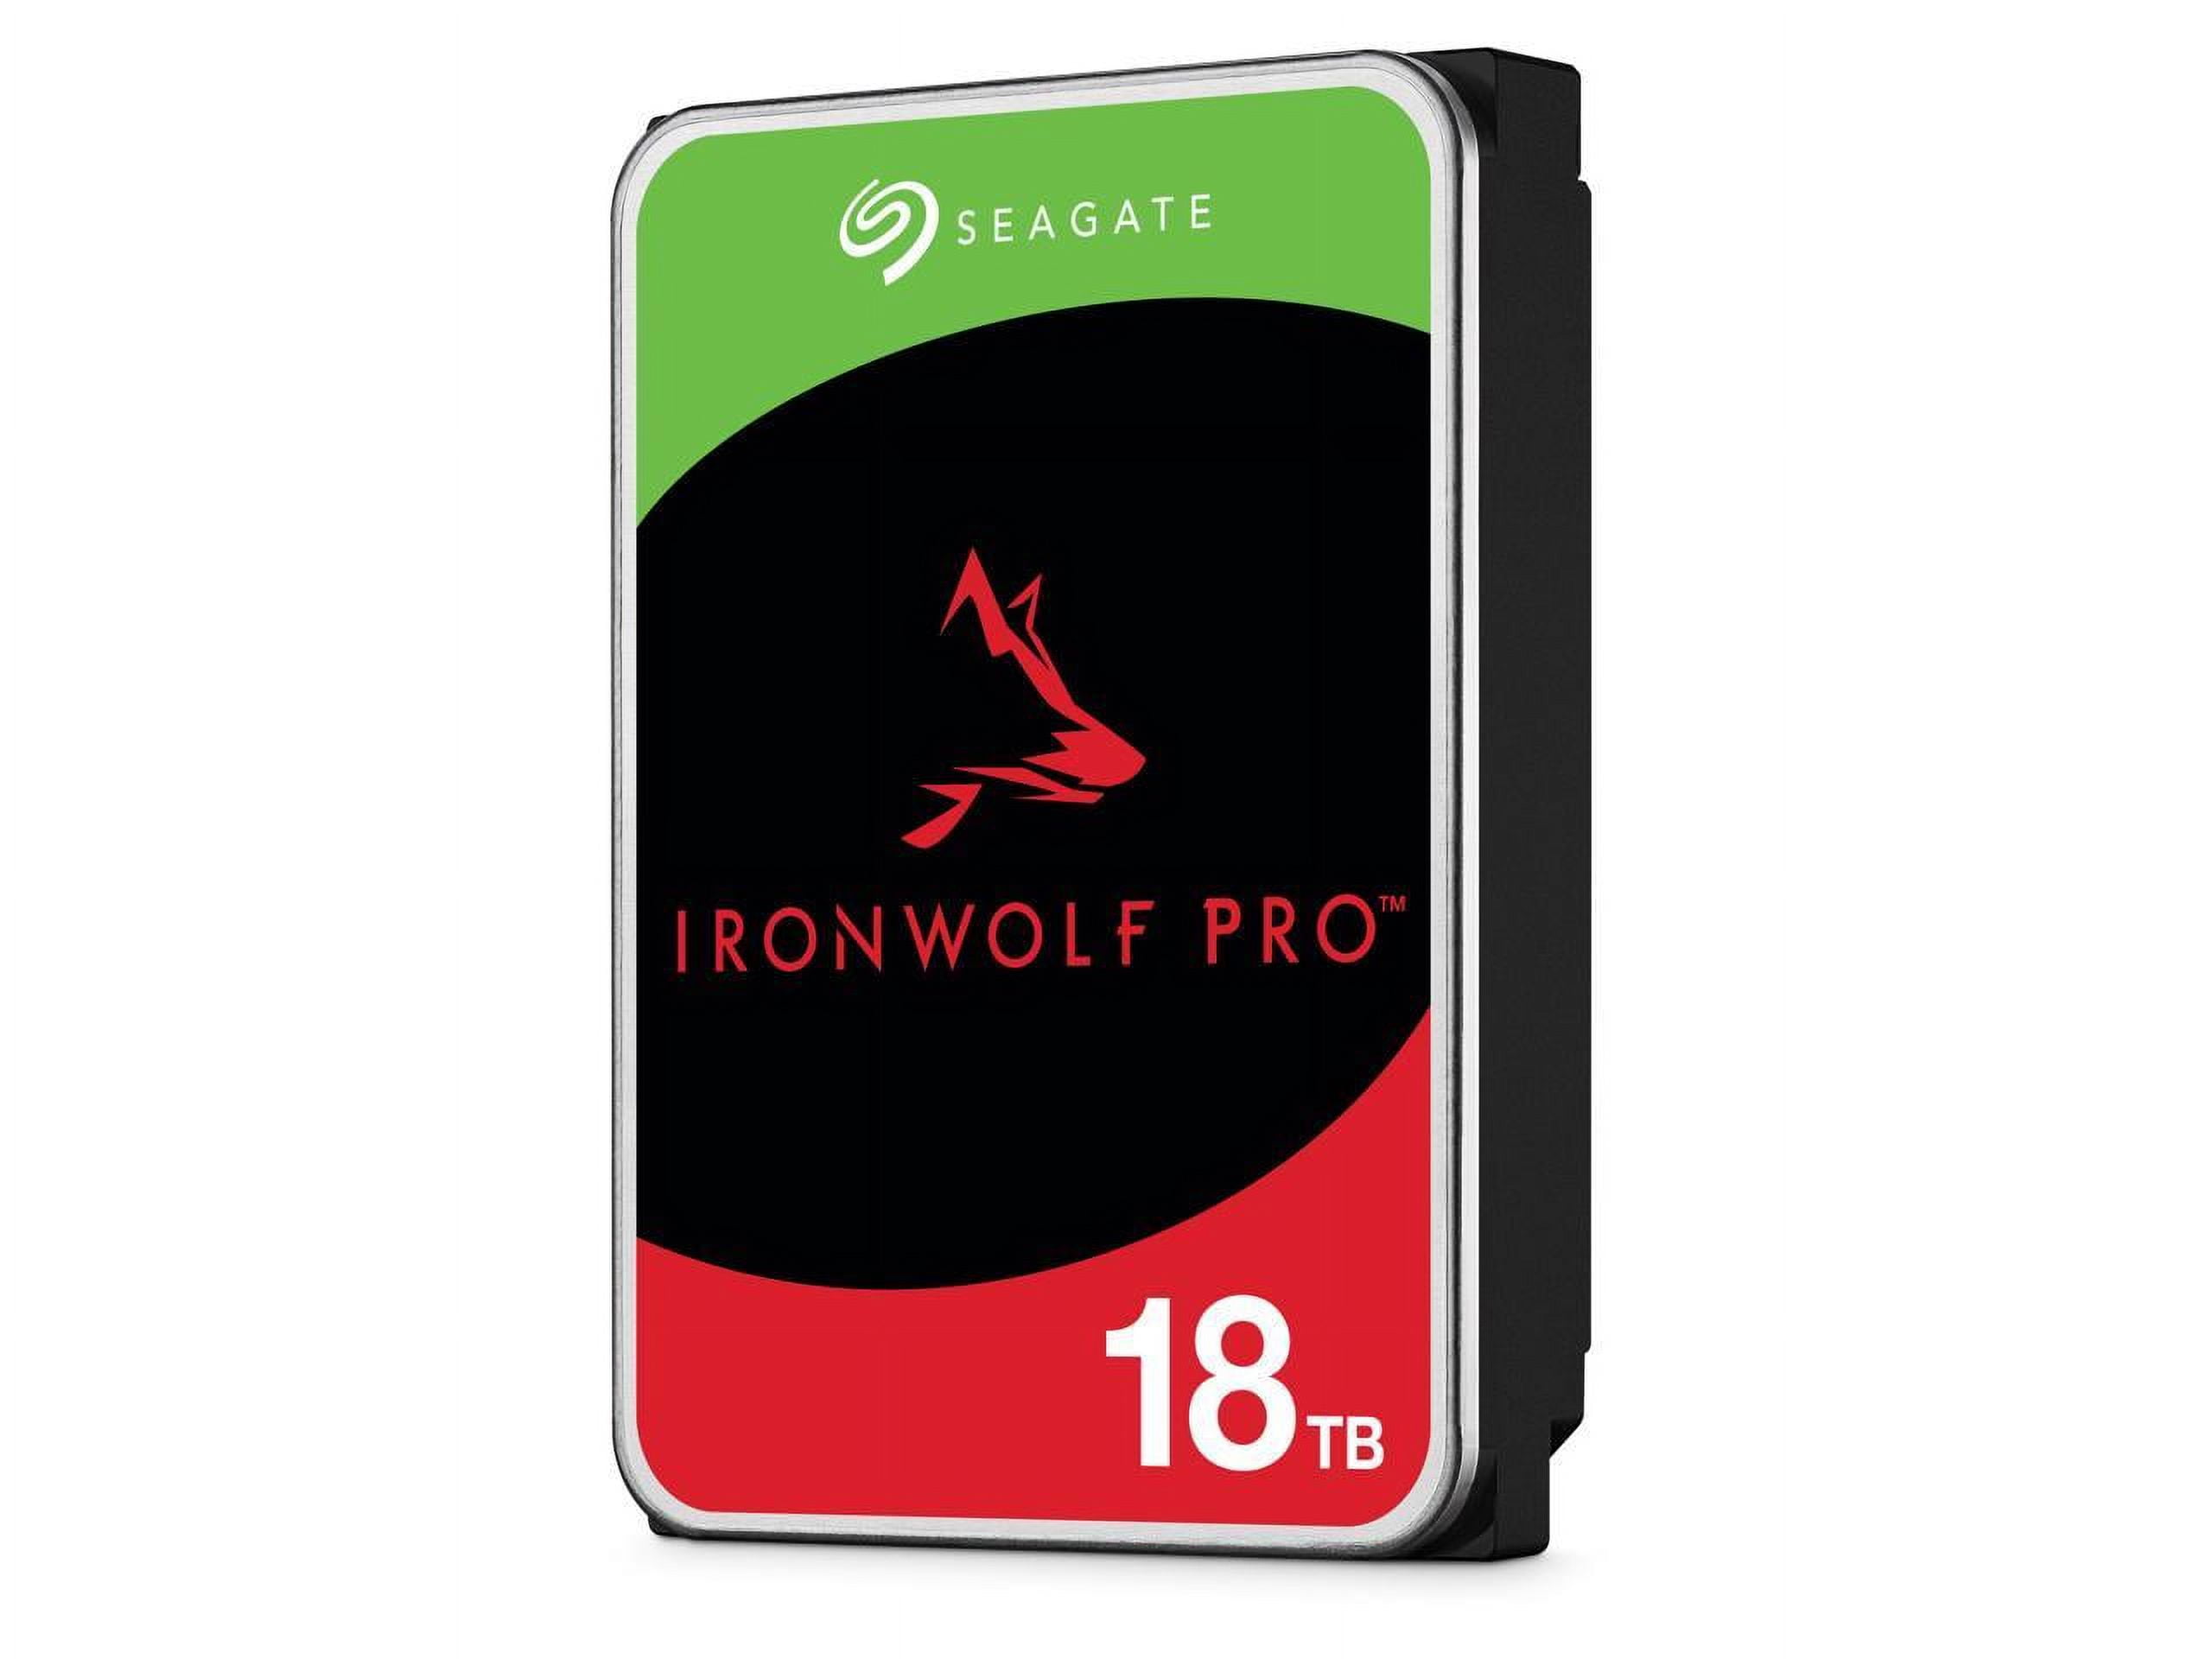 Seagate IronWolf Pro ST18000NE000 - hard drive - 18 TB - SATA 6Gb/s -  ST18000NE000 - Internal Hard Drives 